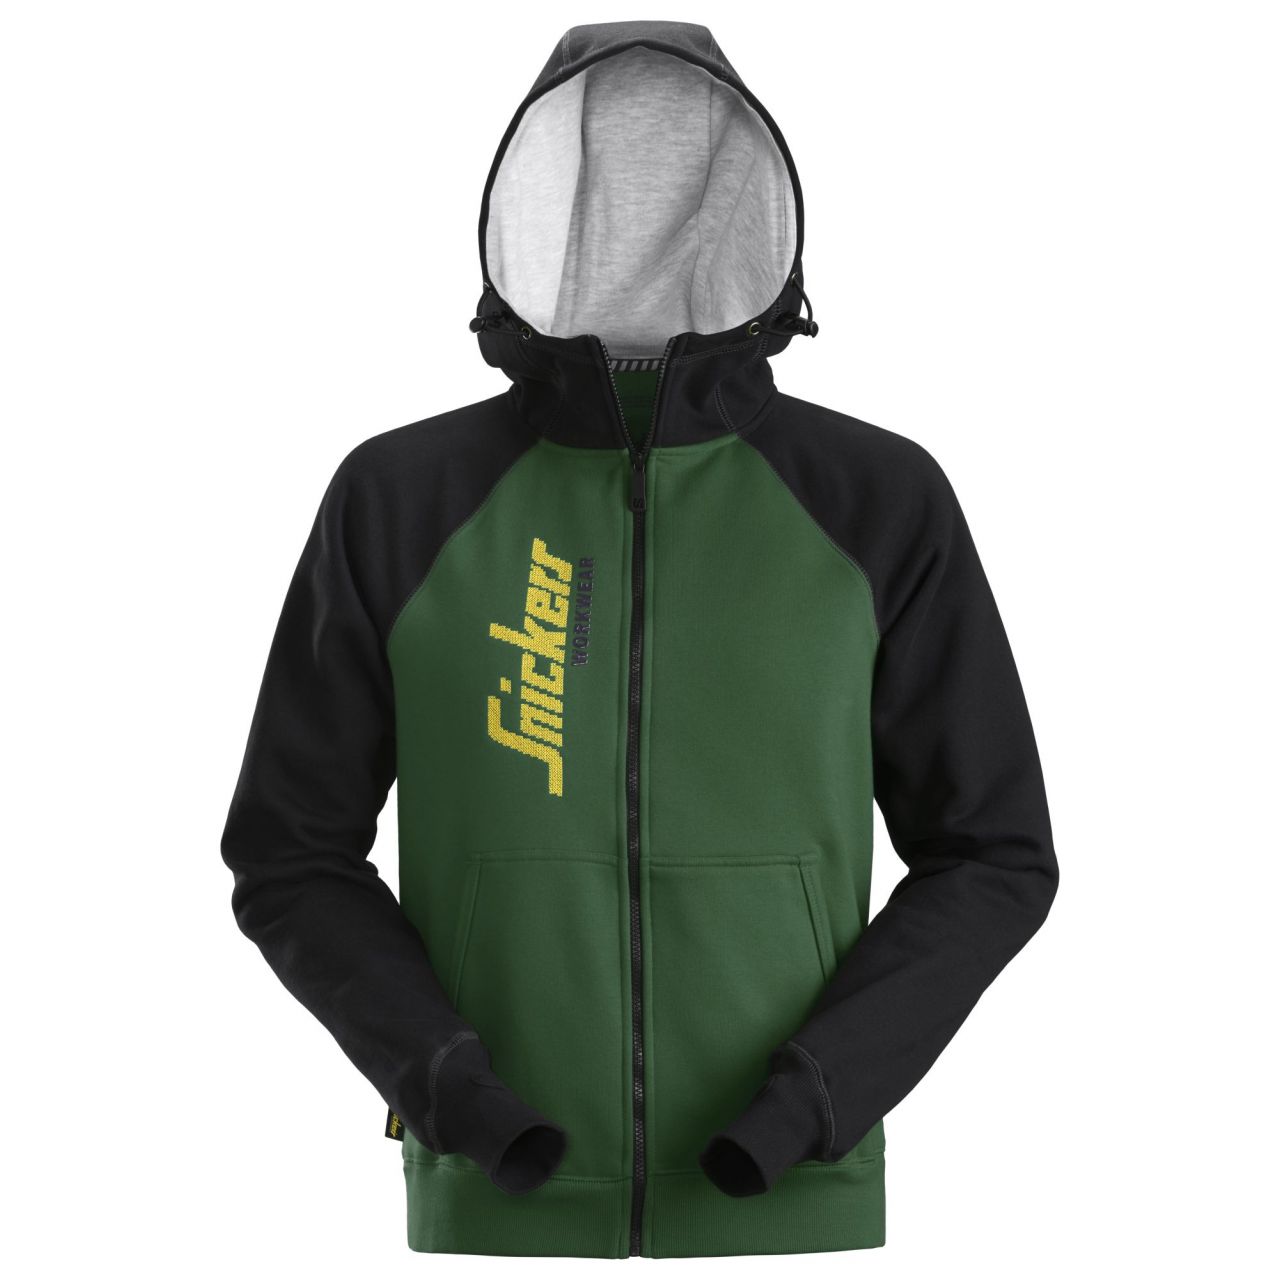 Sudadera con capucha con cremallera completa y logotipo Verde bosque/Negra talla L